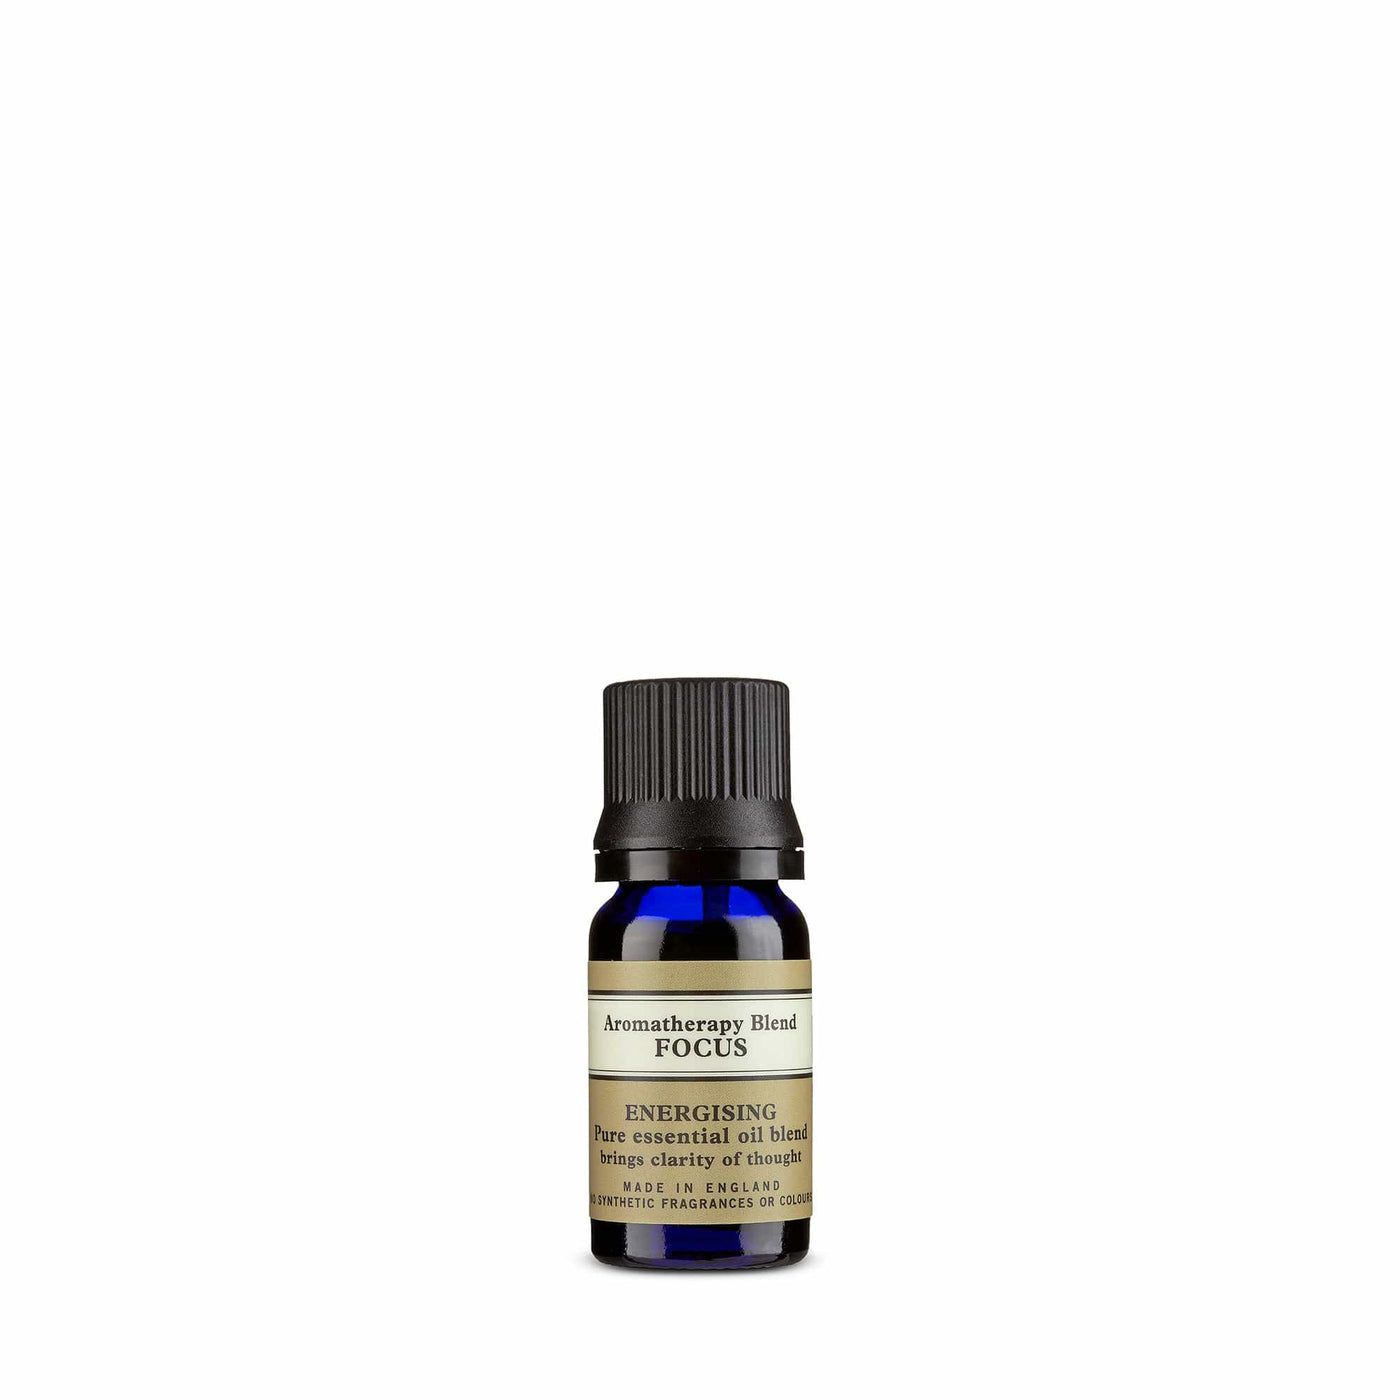 Neal's Yard Remedies Aromatherapy Blend - Focus 10ml